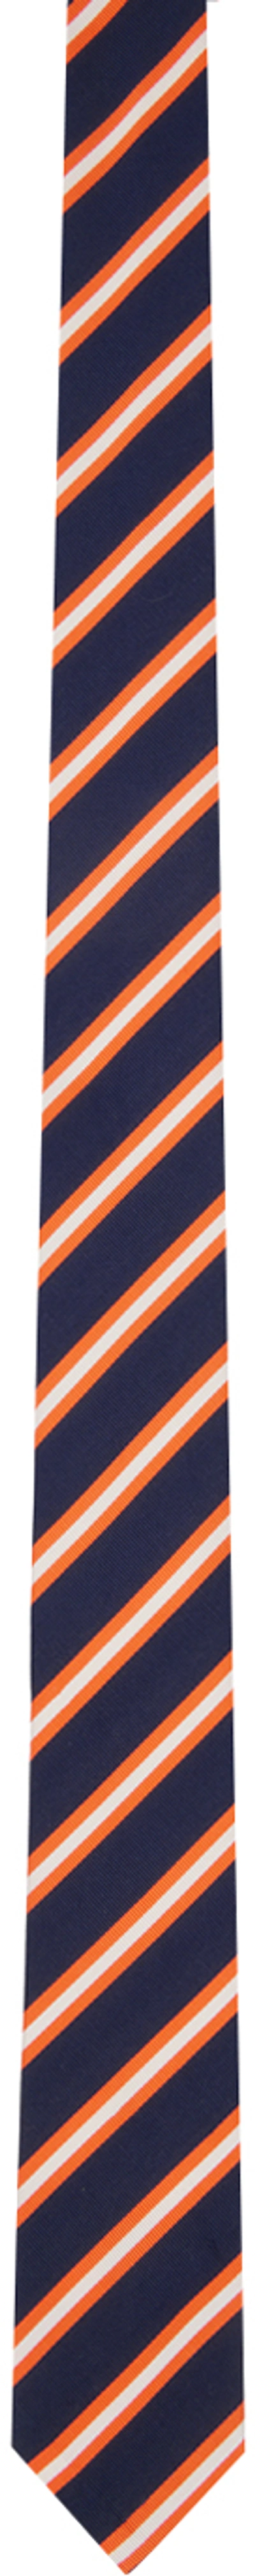 Thom Browne Navy & Orange Striped Neck Tie In 825 Orange